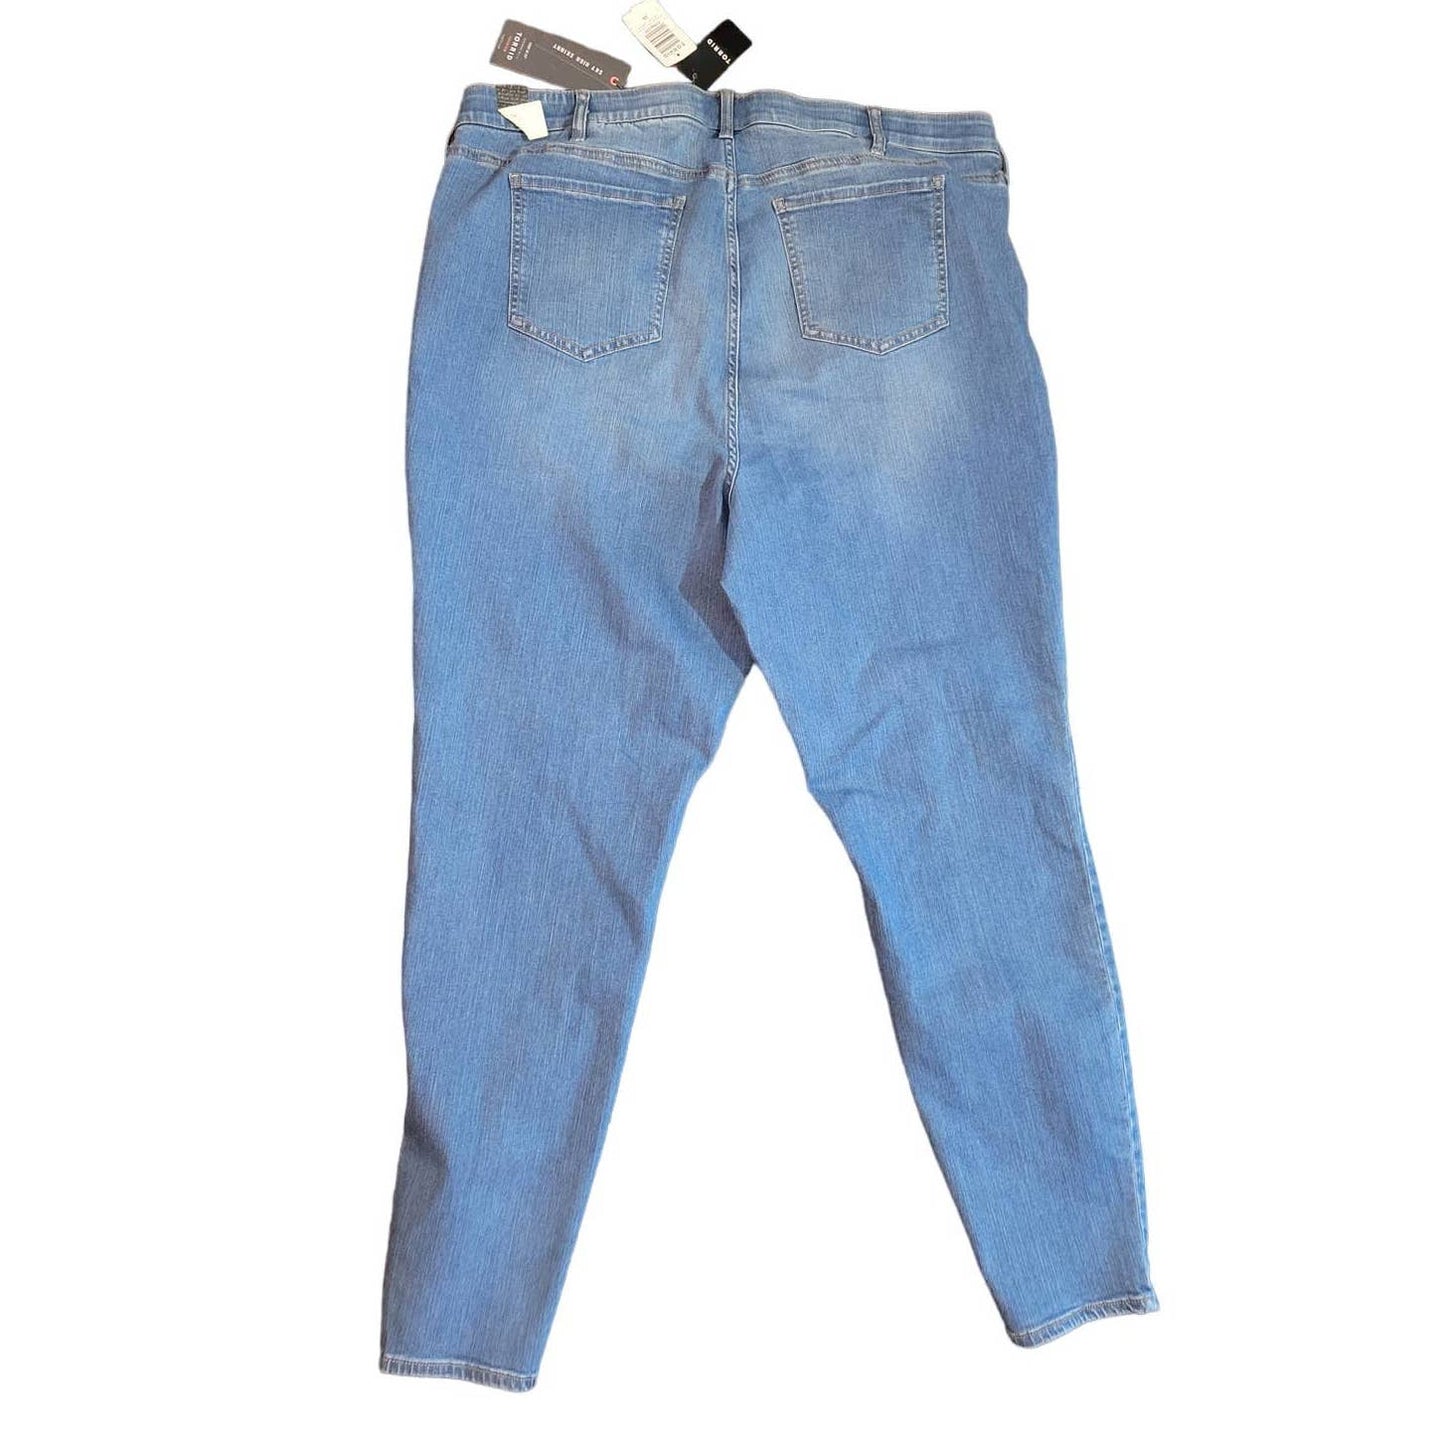 Torrid Premium Jeans Plus Size 24 Tall Sky High Skinny Blue Denim Stretch